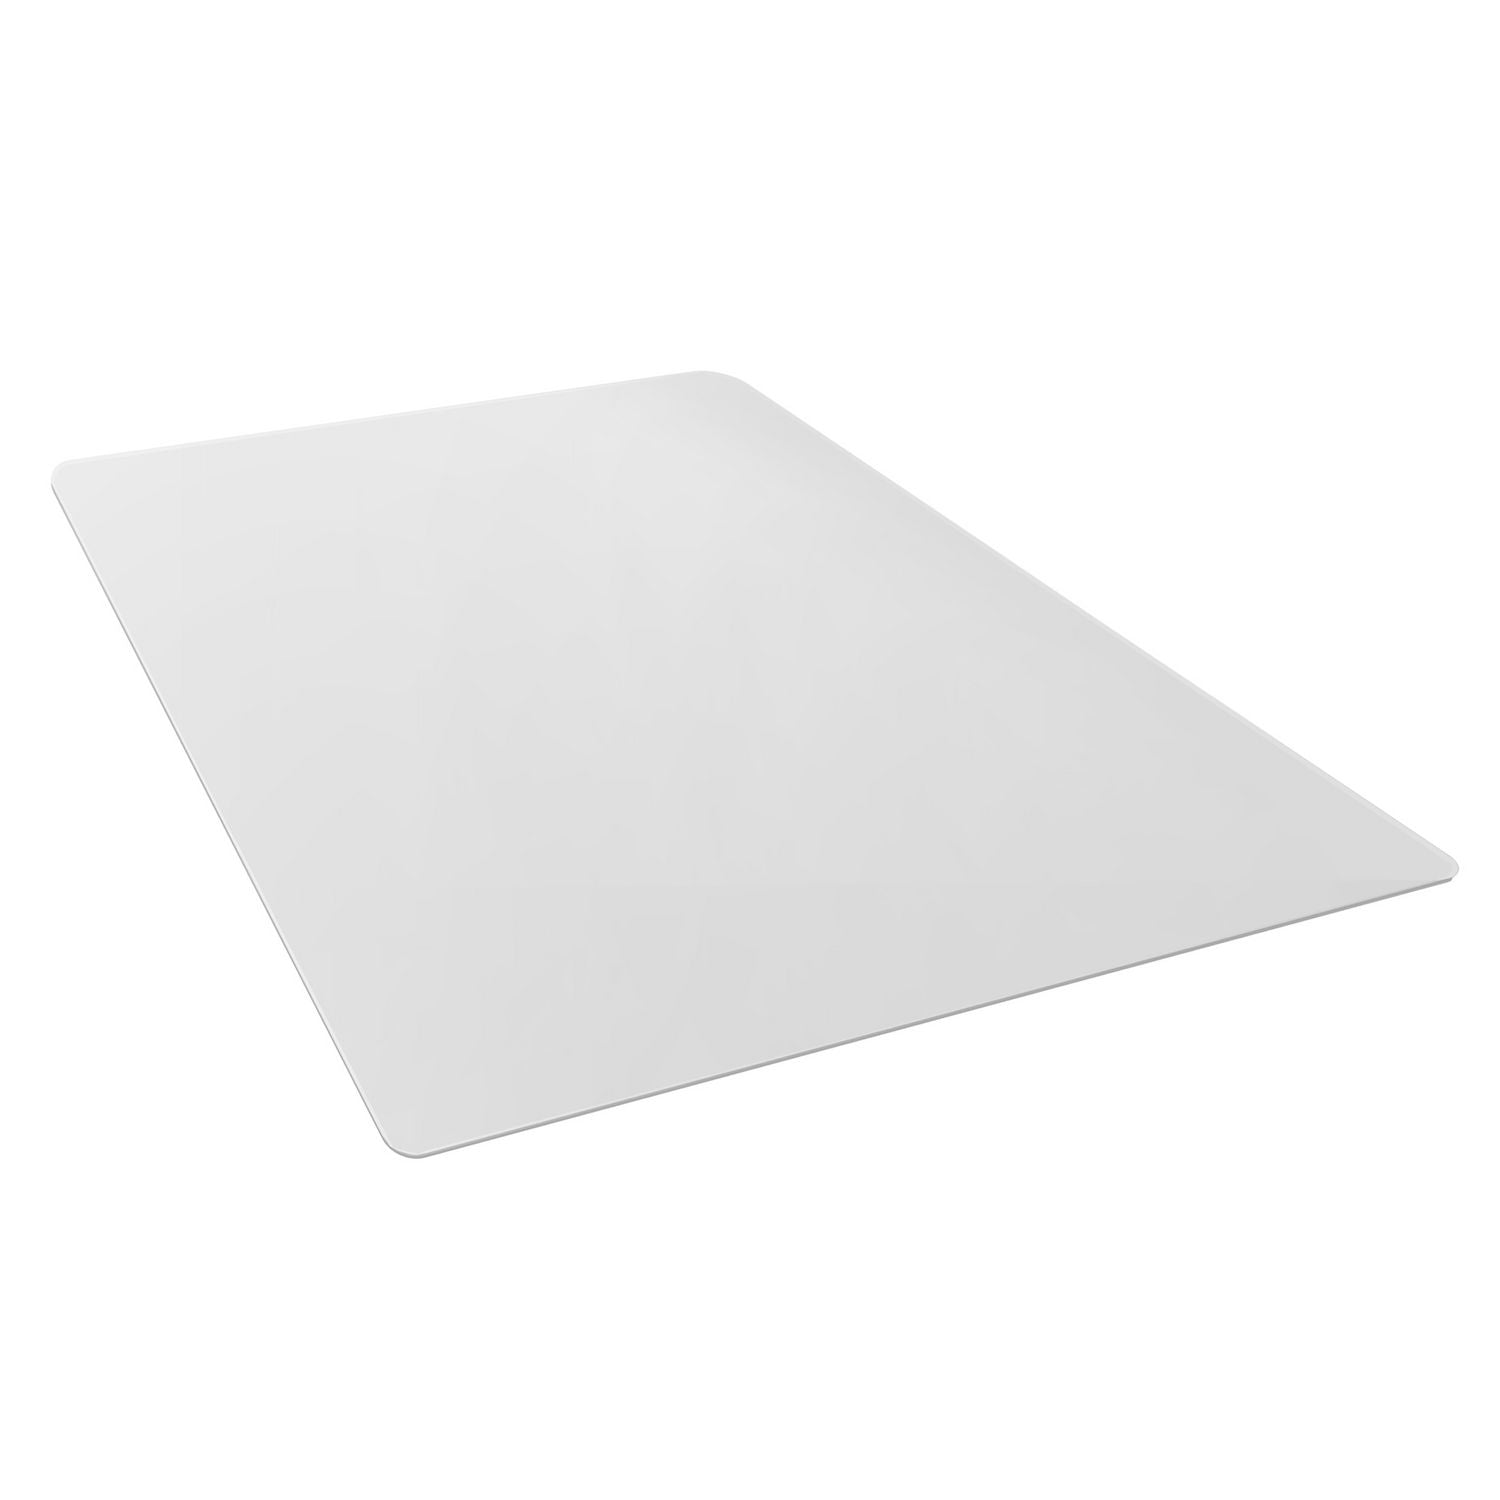 ecotex-marlon-bioplus-rectangular-polycarbonate-chair-mat-for-hard-floors-rectangular-29-x-47-clear_flrnccmflbs0001 - 1